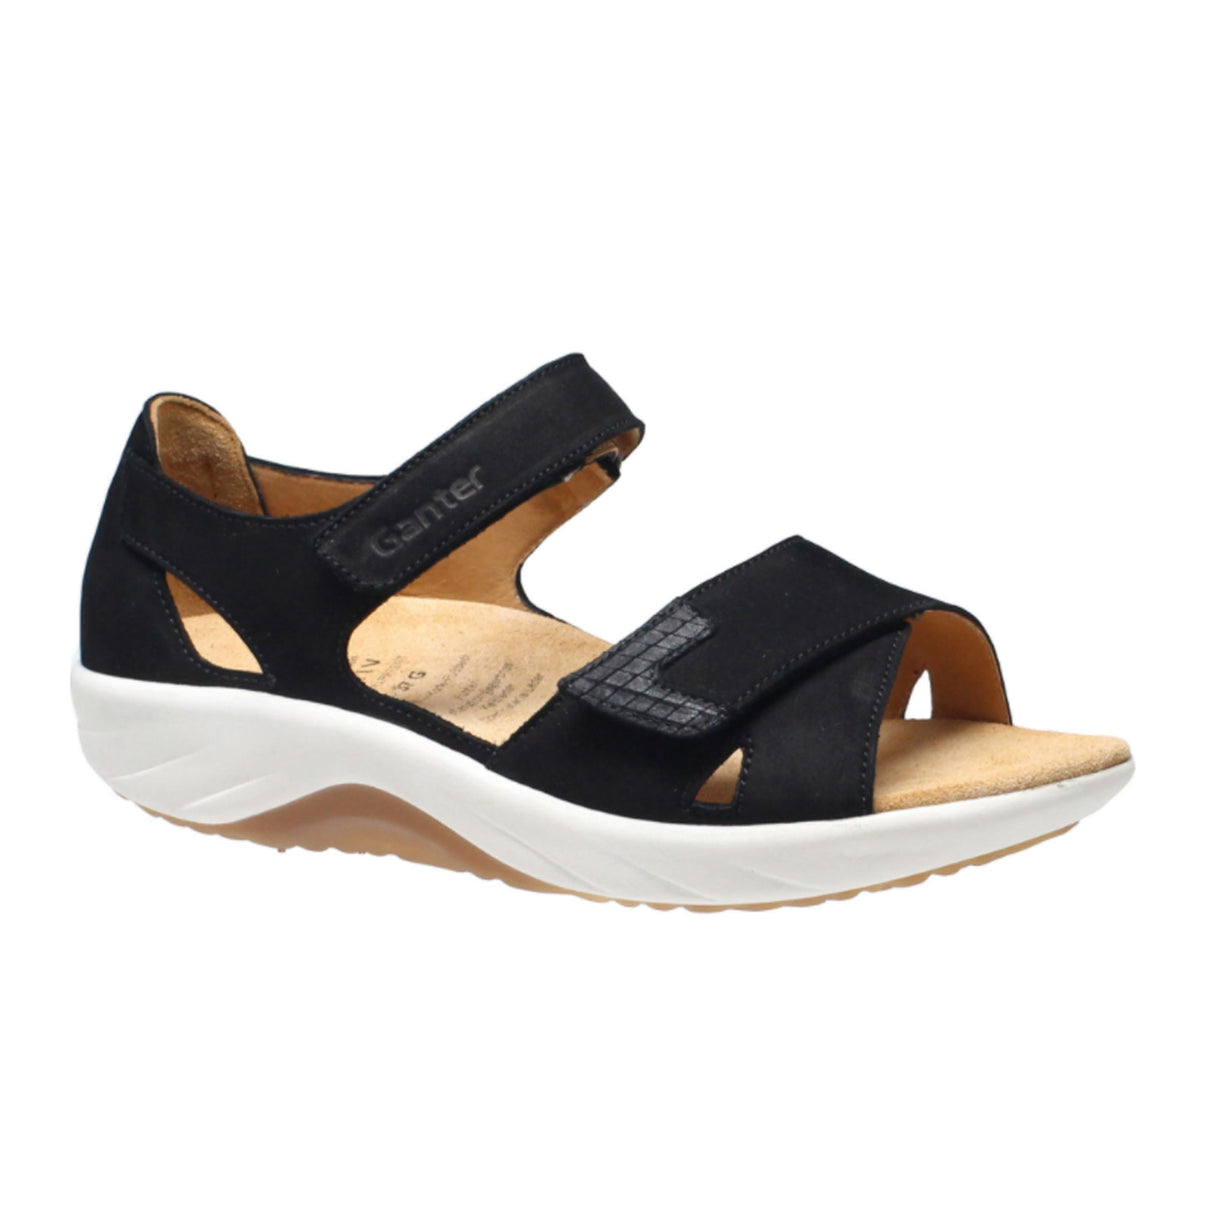 Ganter Genda 6 Backstrap Sandal (Women) - Black Sandals - Backstrap - The Heel Shoe Fitters